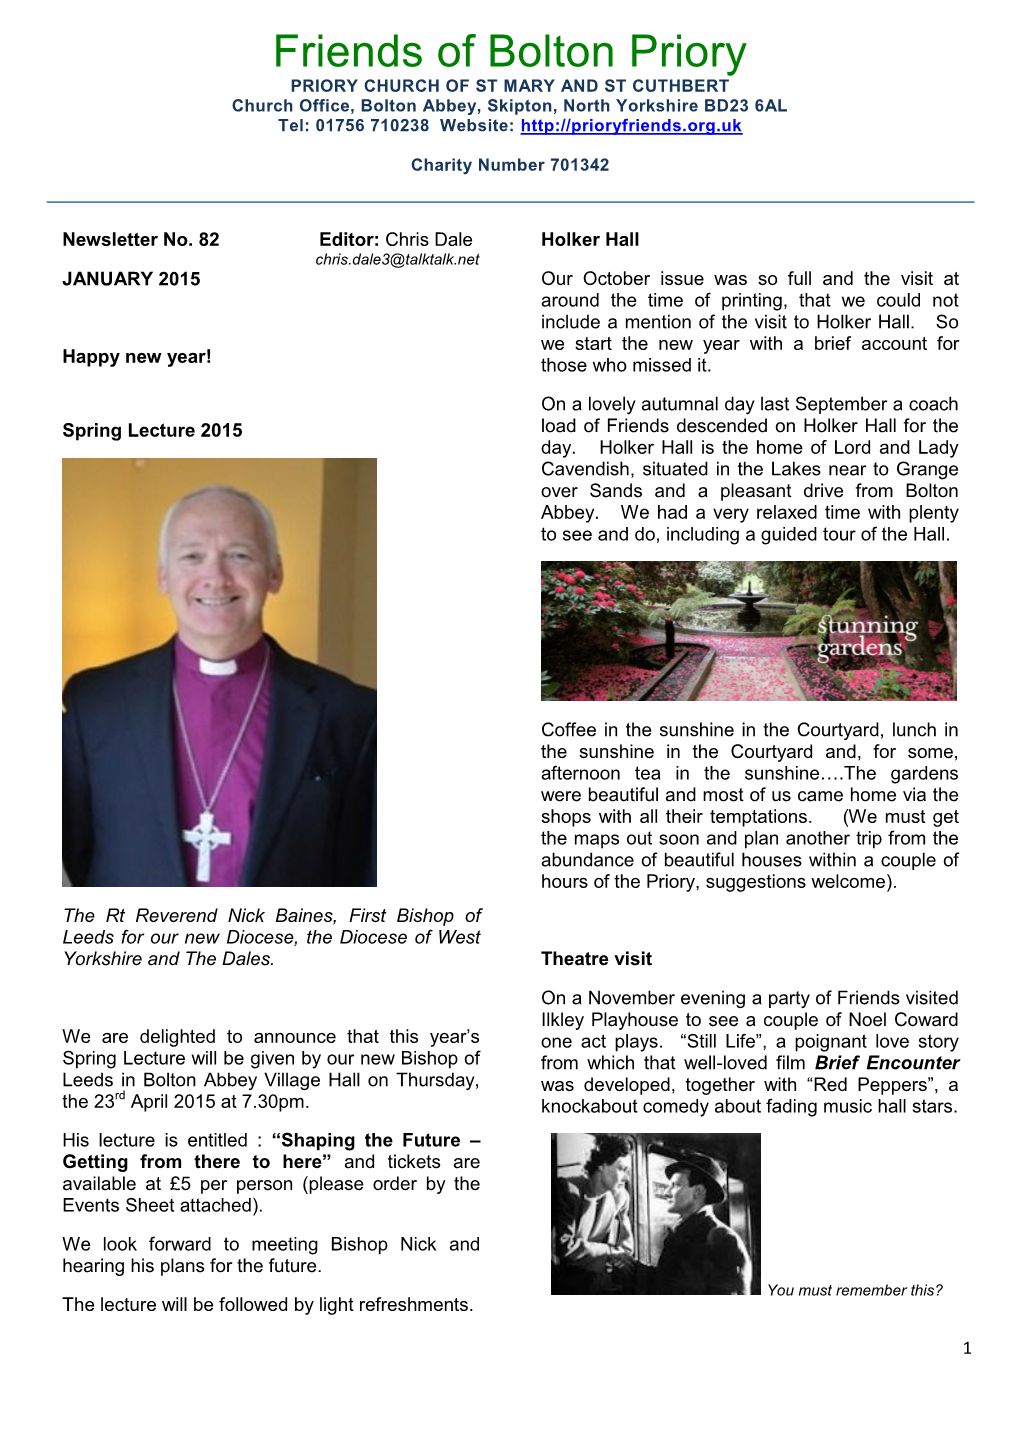 Newsletter Issue 82 January 2015